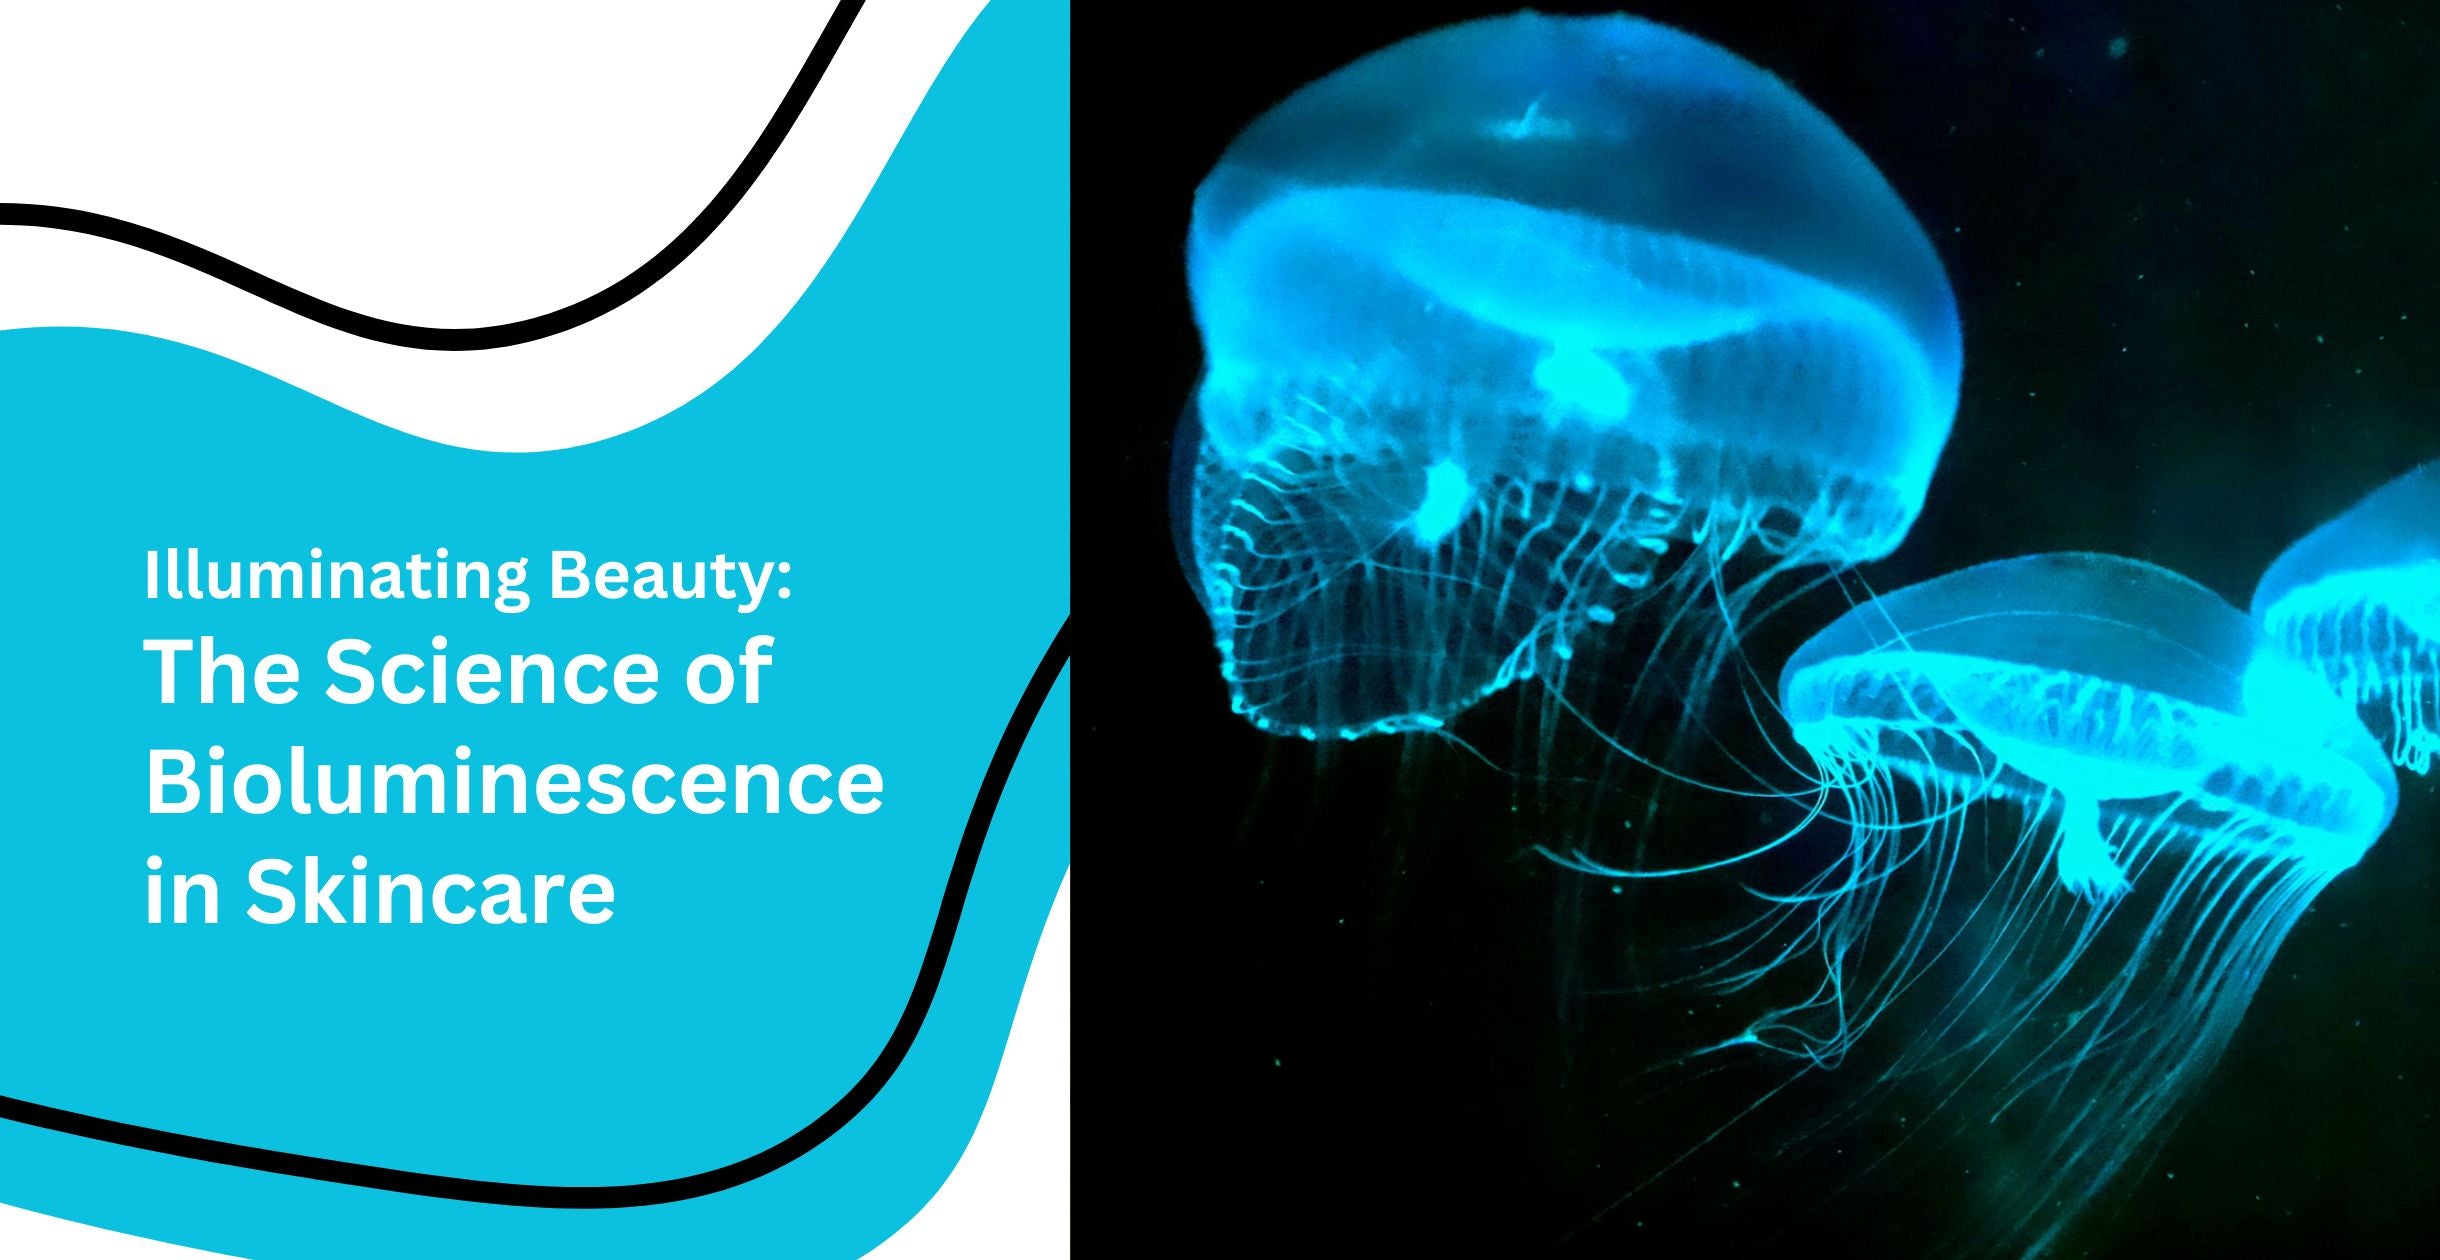 Illuminating Beauty: The Science of Bioluminescence in Skincare